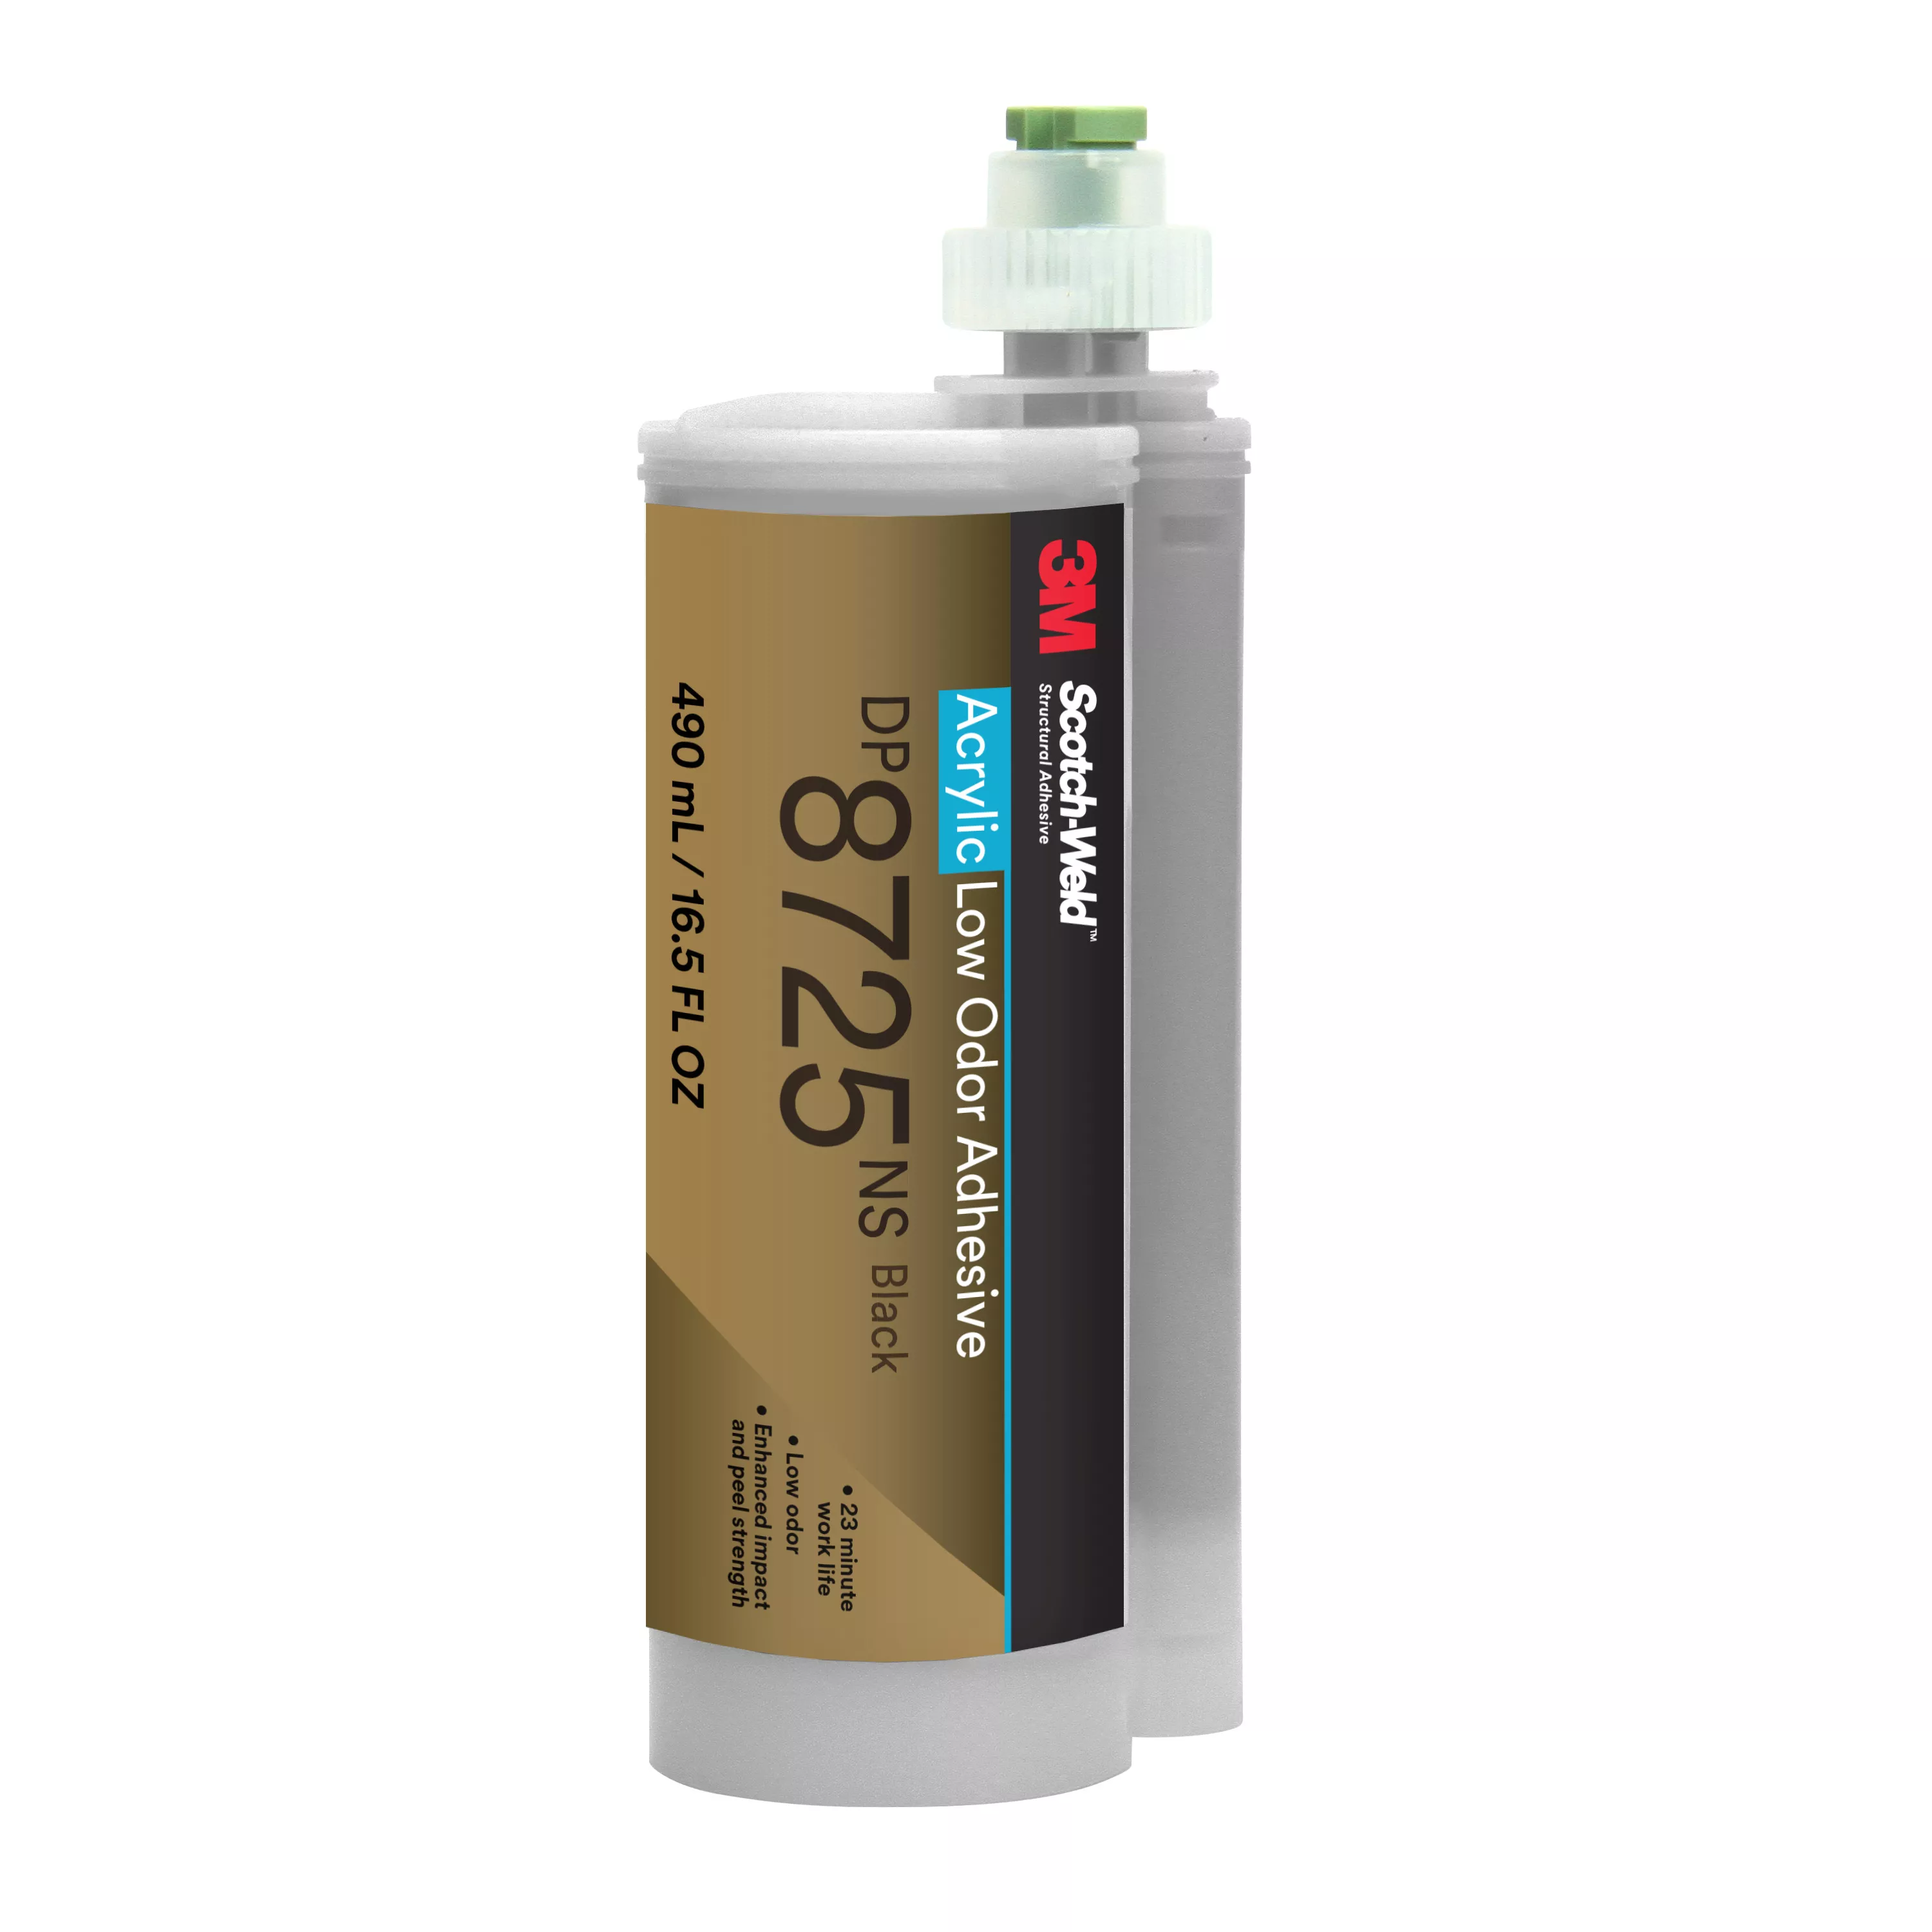 SKU 7100244480 | 3M™ Scotch-Weld™ Low Odor Acrylic Adhesive DP8725NS